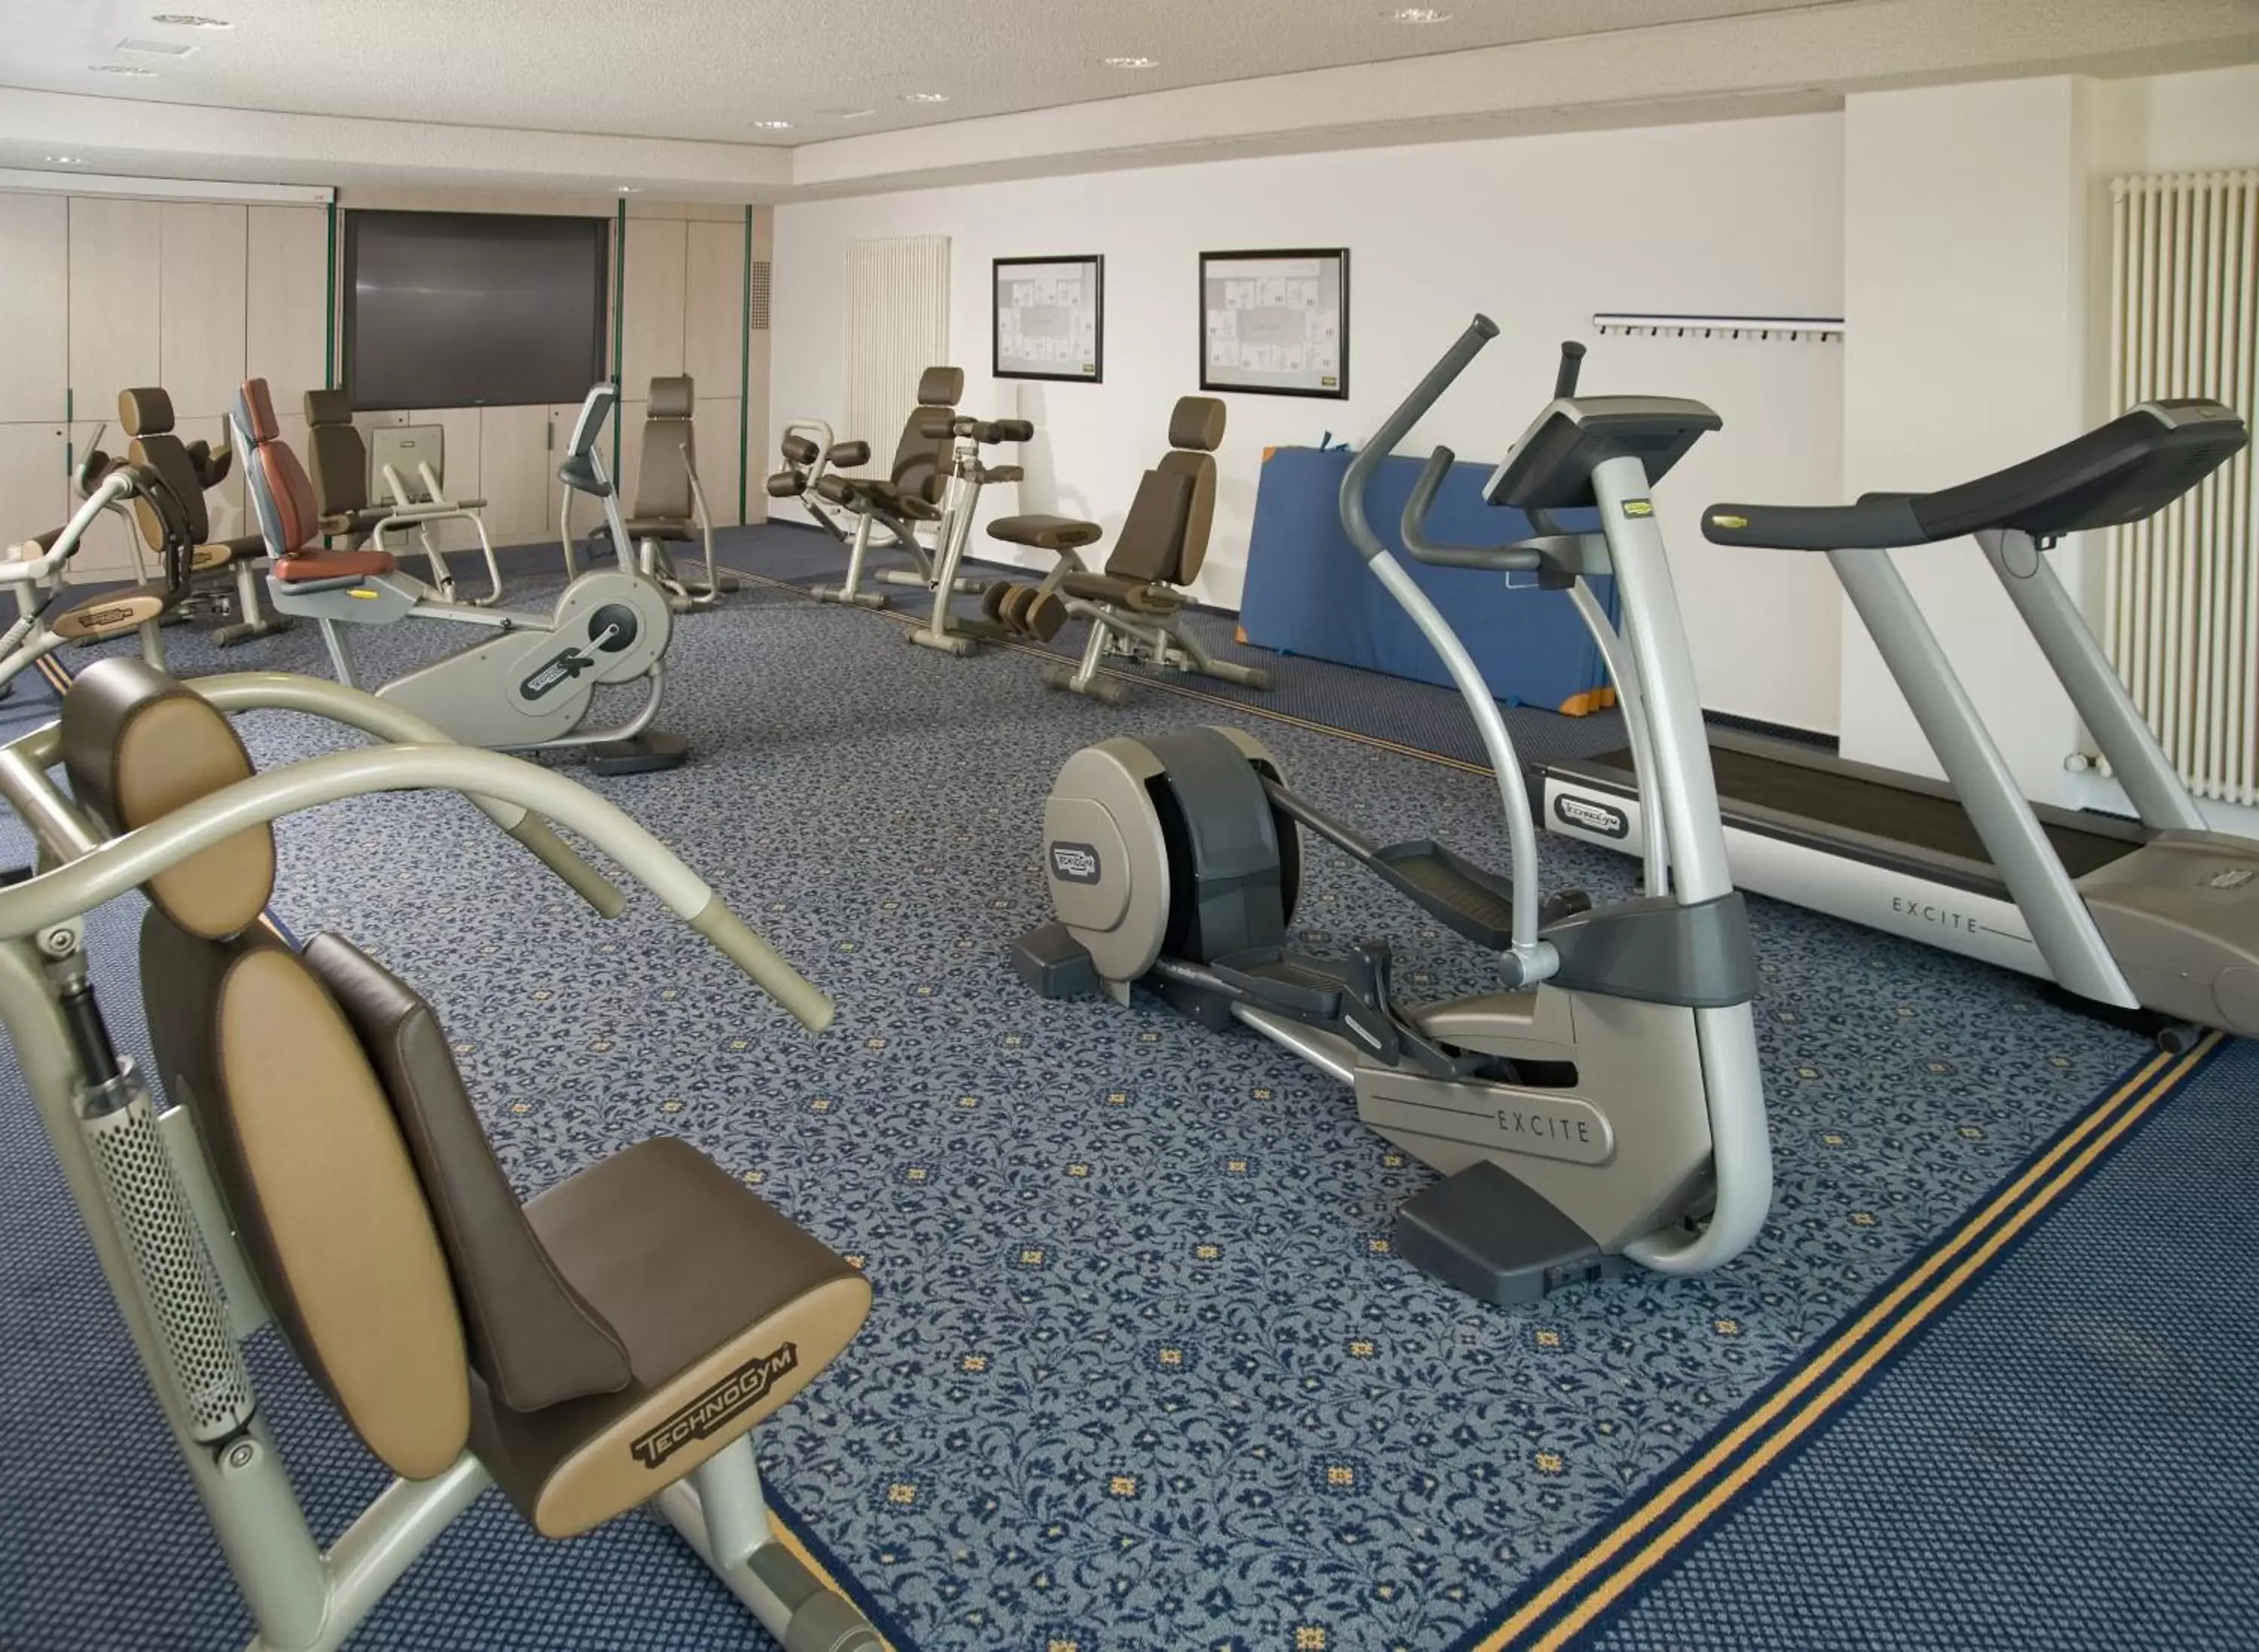 Fitness centre/facilities, Fitness Center/Facilities in Göbels Hotel Rodenberg